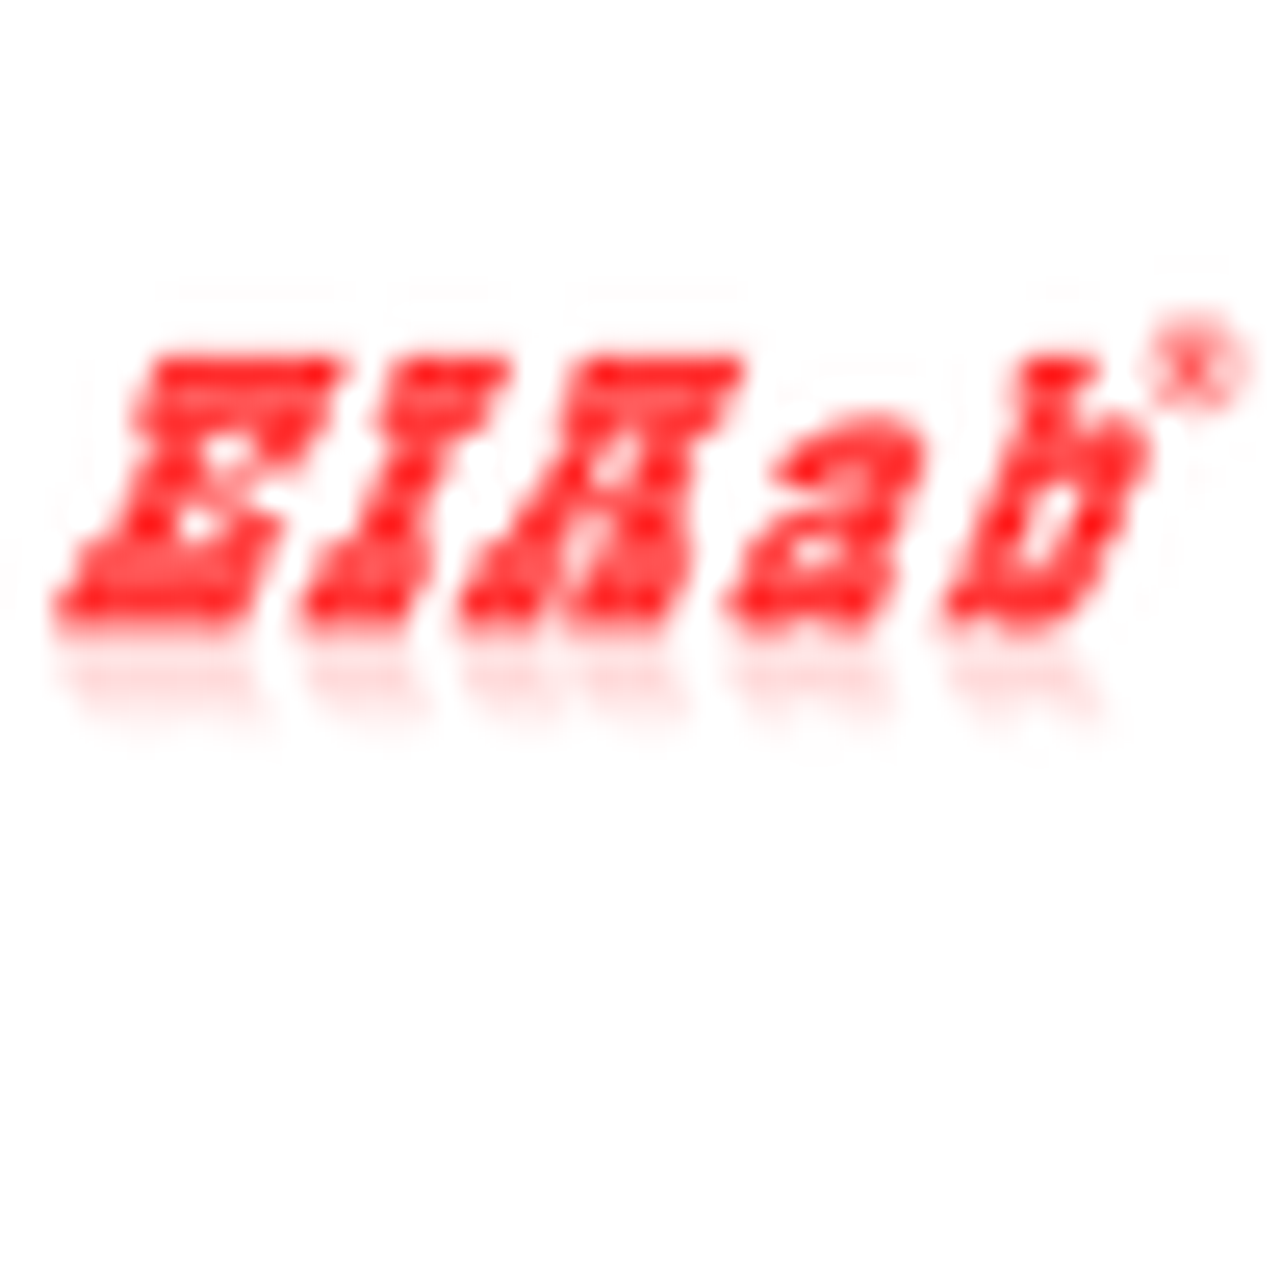 Mouse Btf3/Transcription factor BTF3 ELISA Kit